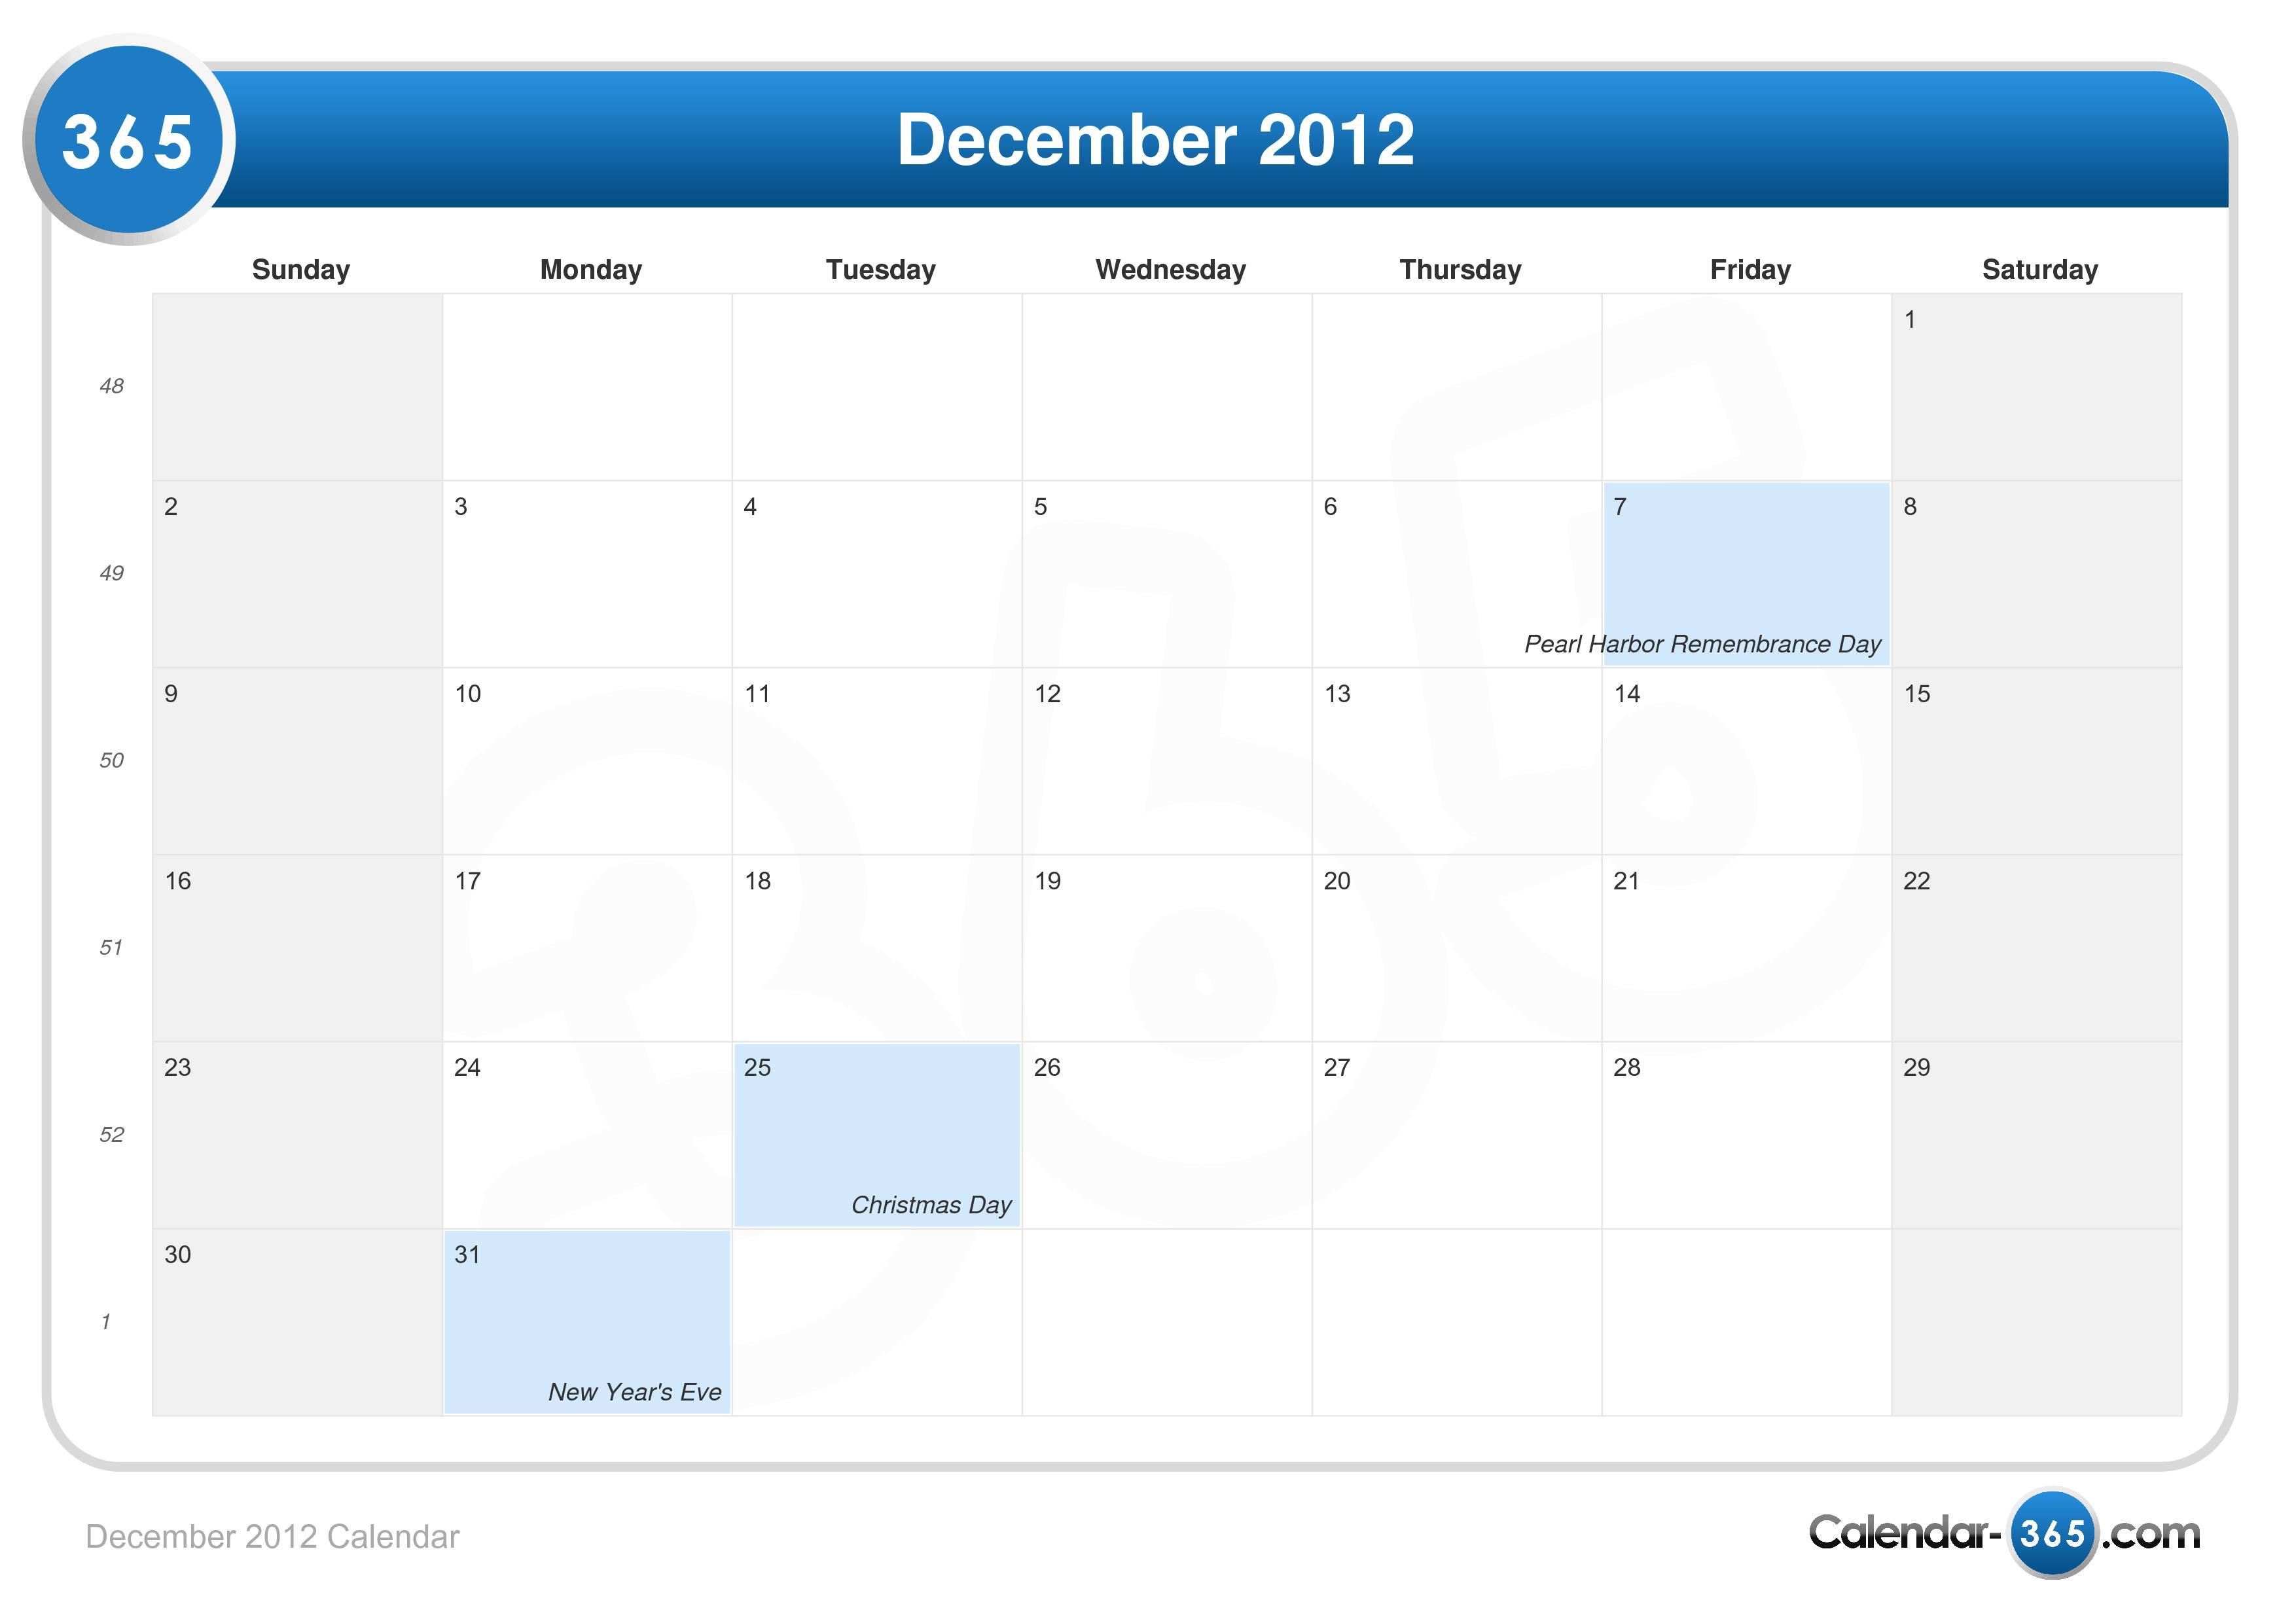 Weekly Calendar December 2012